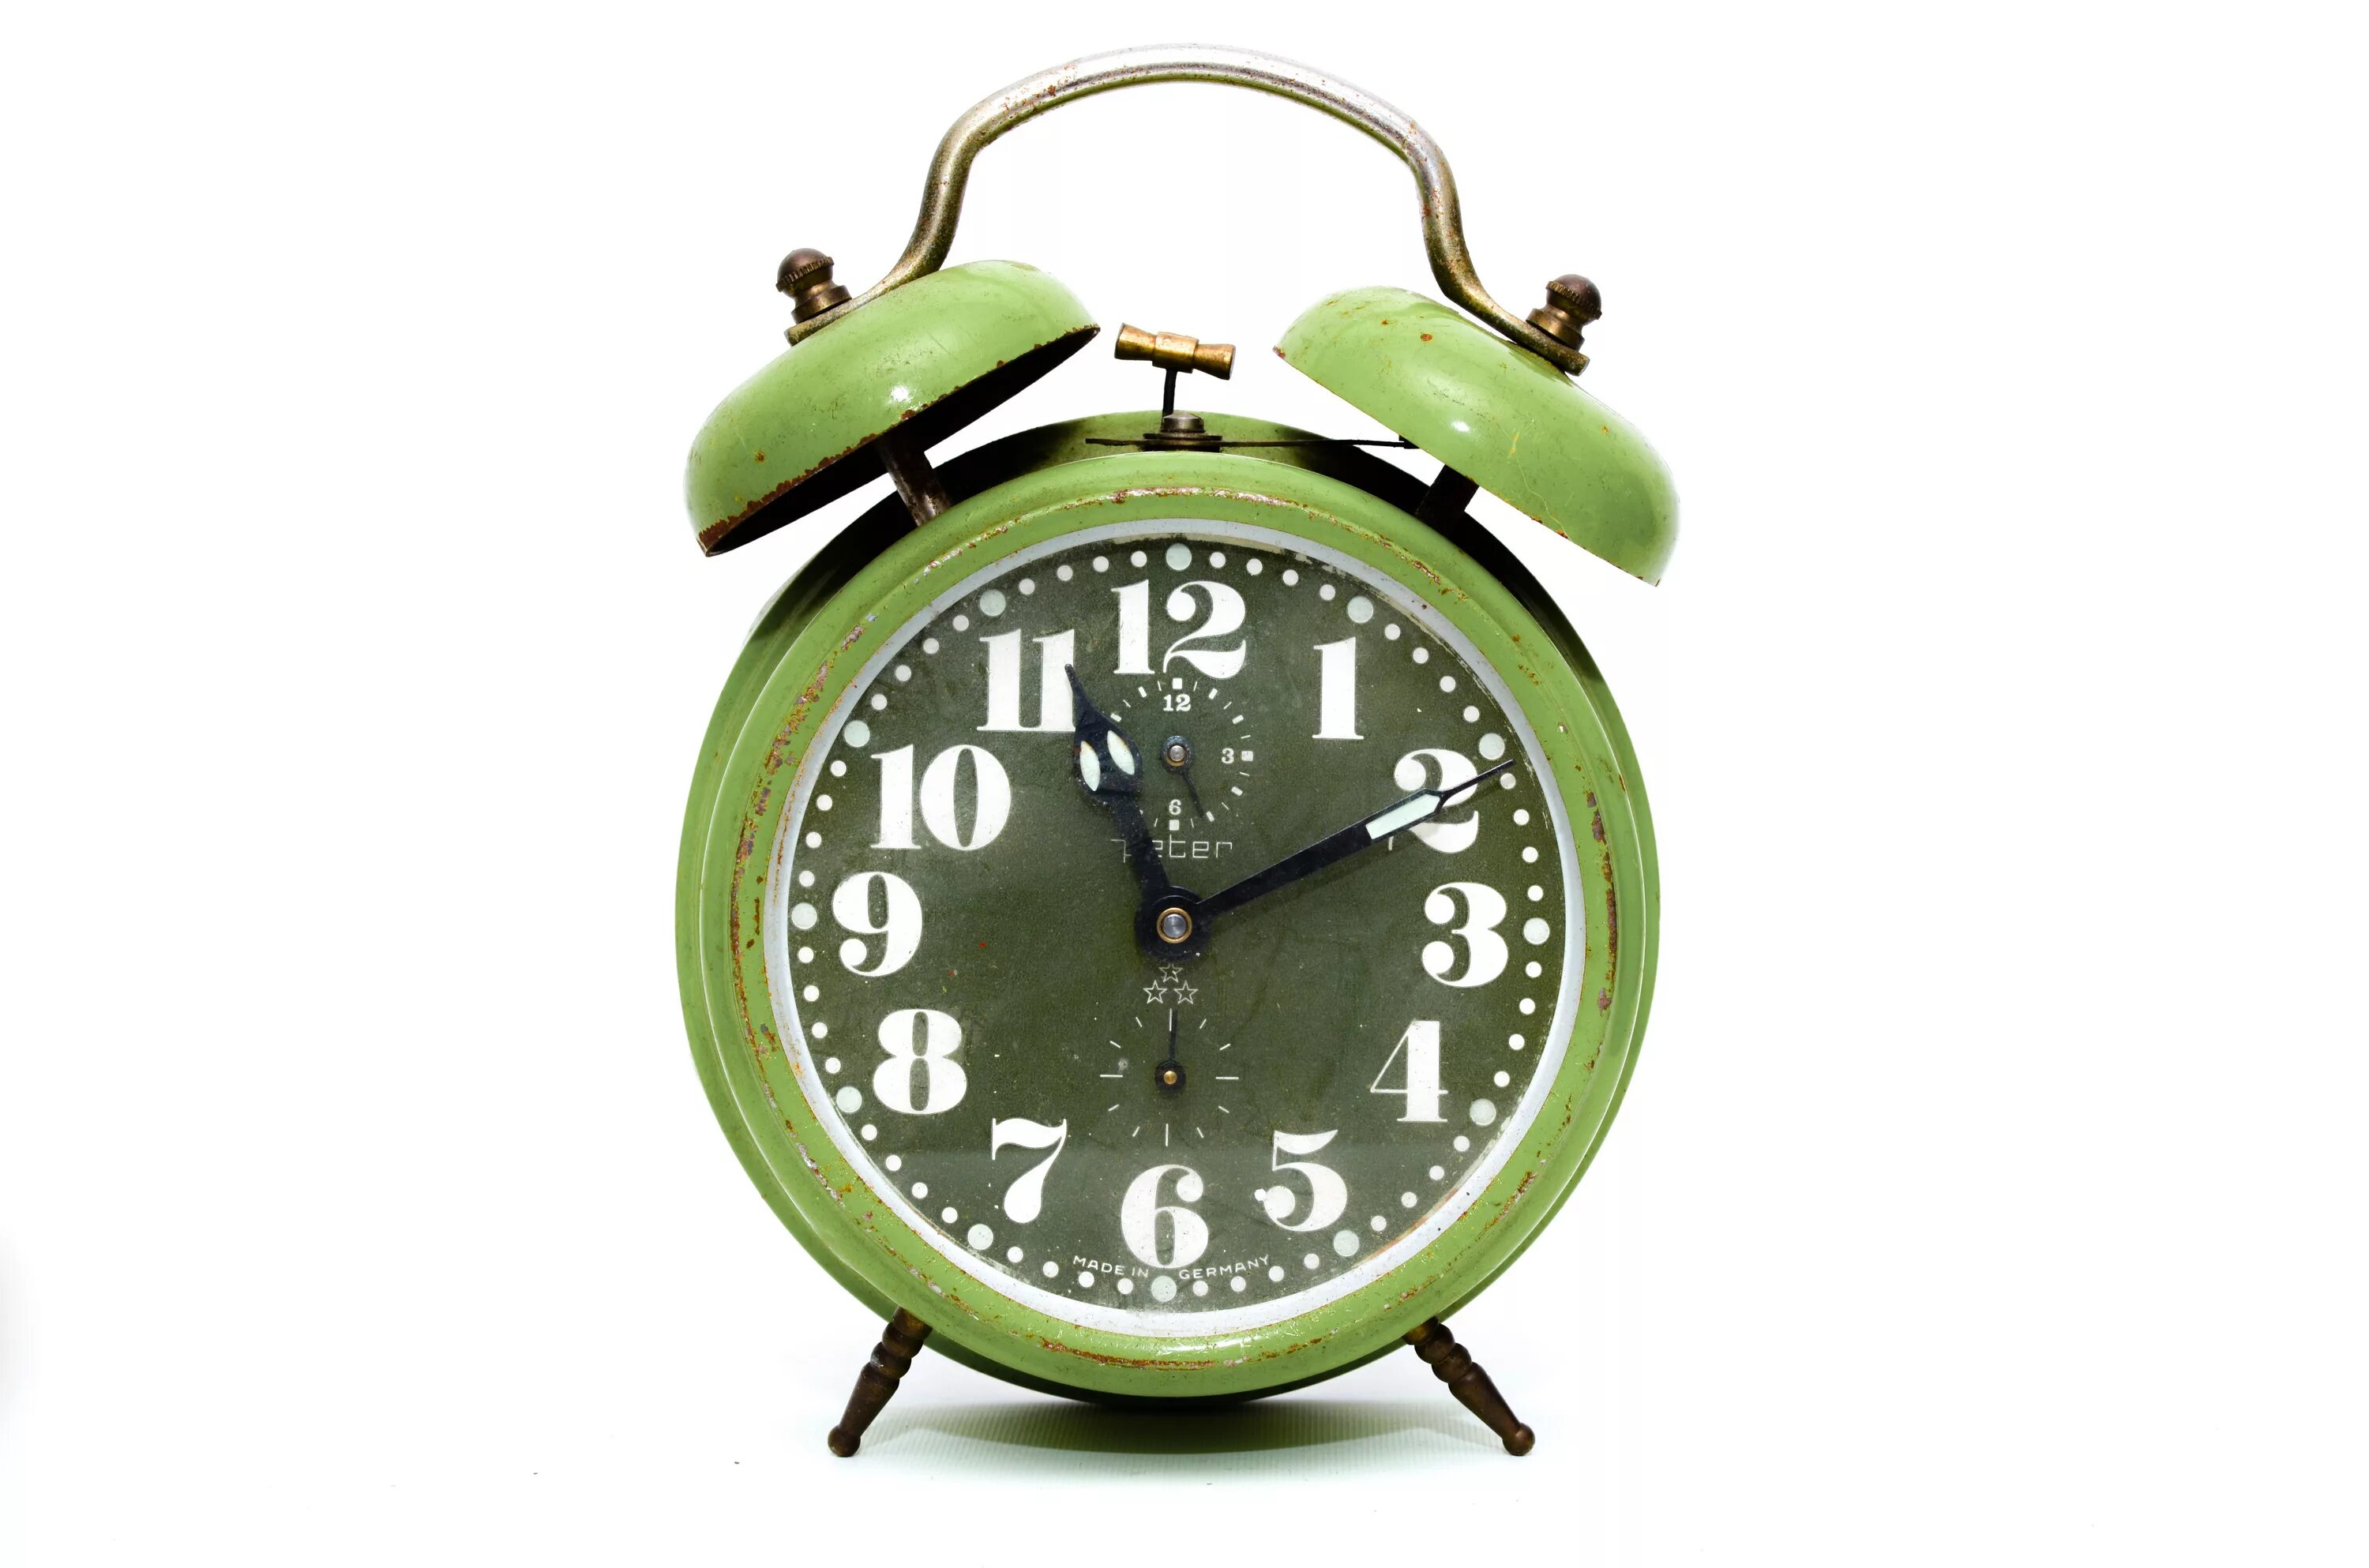 Будильник 15 часов. Будильник Аларм клок. Старые часы будильник. Часы настольные зеленые. Винтажный будильник.